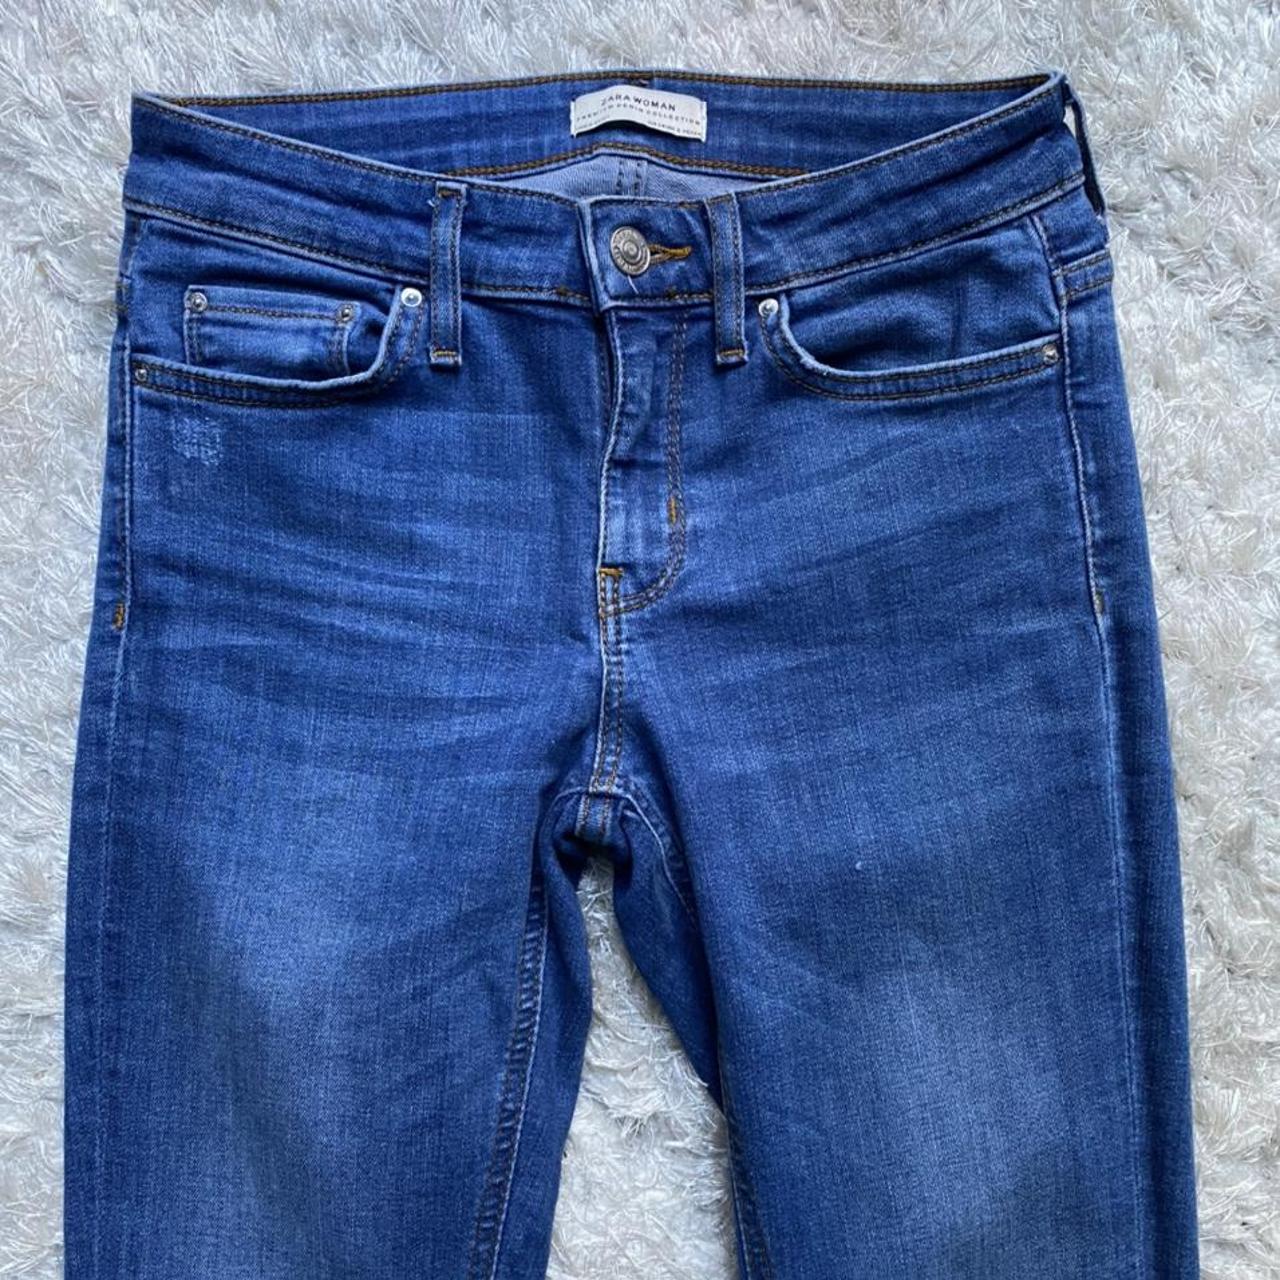 Zara Men's Blue and Navy Jeans | Depop